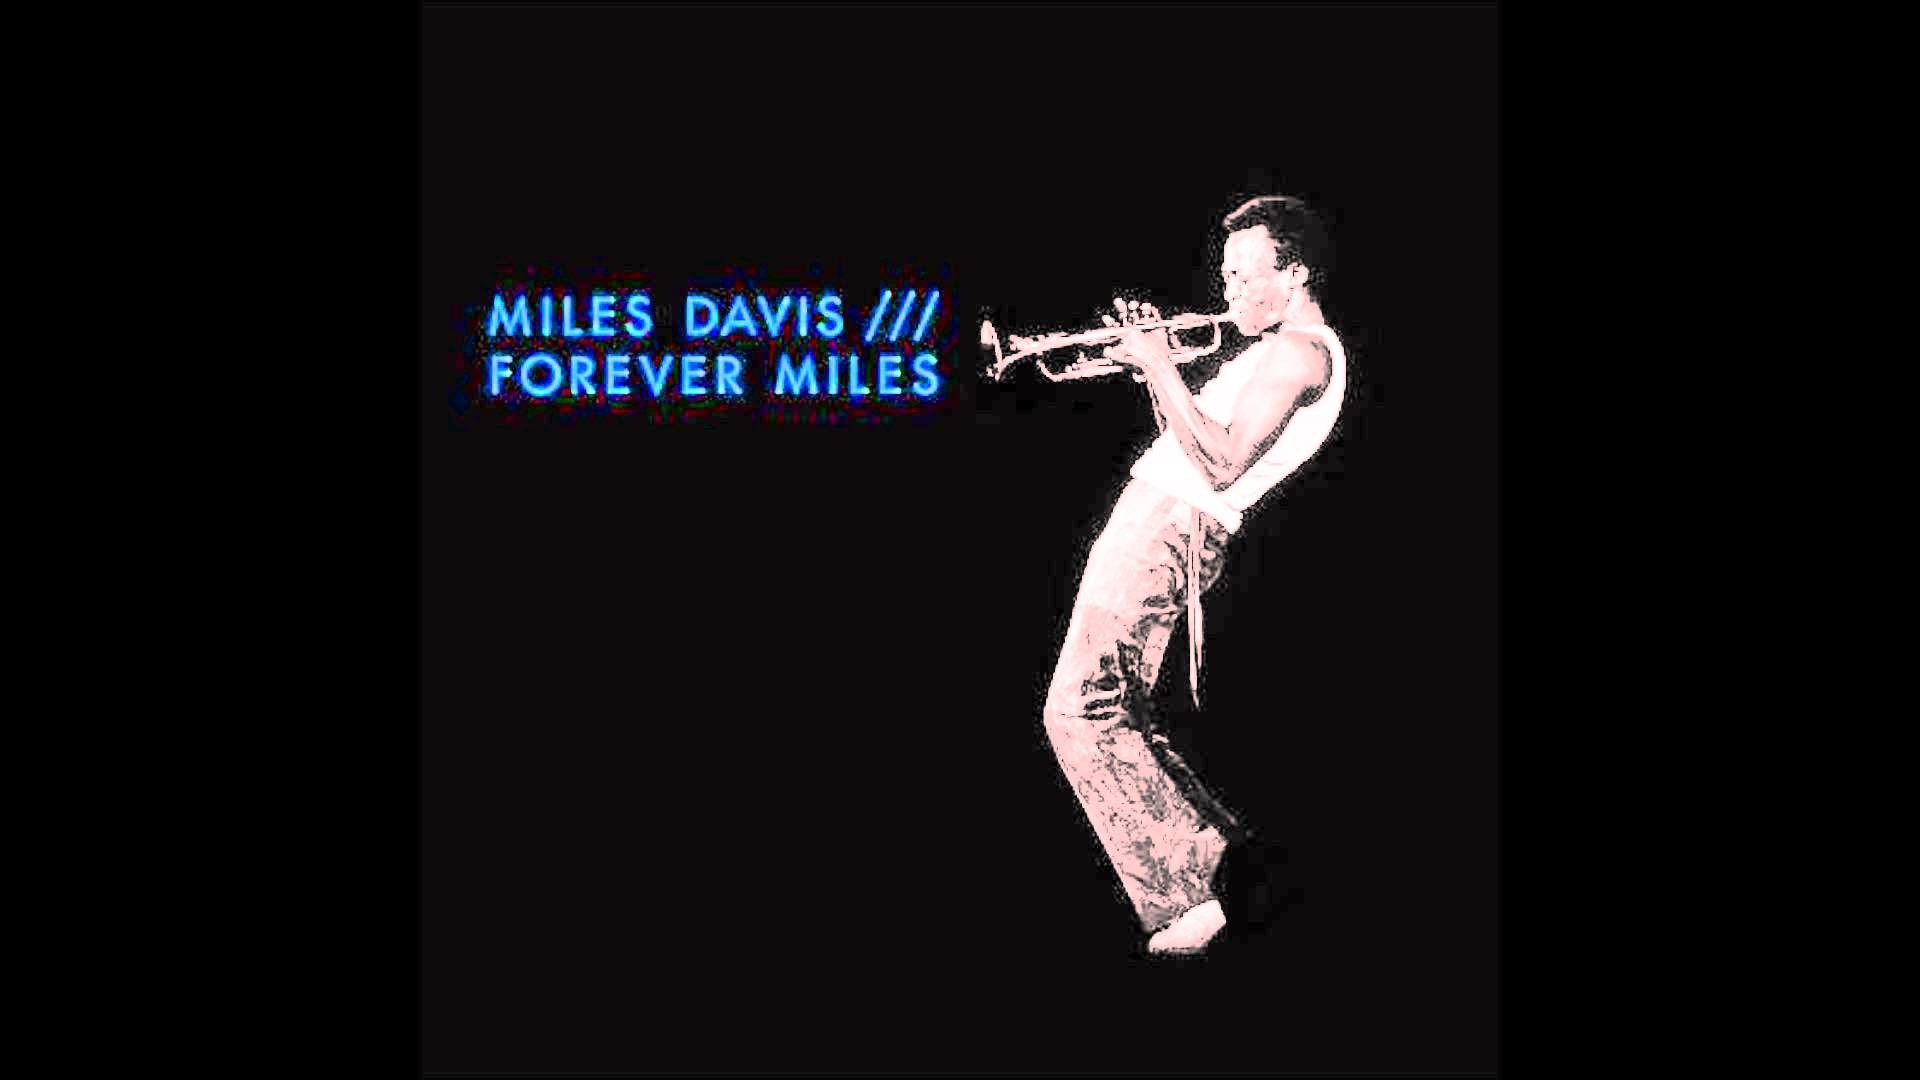 1920x1080 Miles Davis - Directions (Unreleased Version) 3/7/70